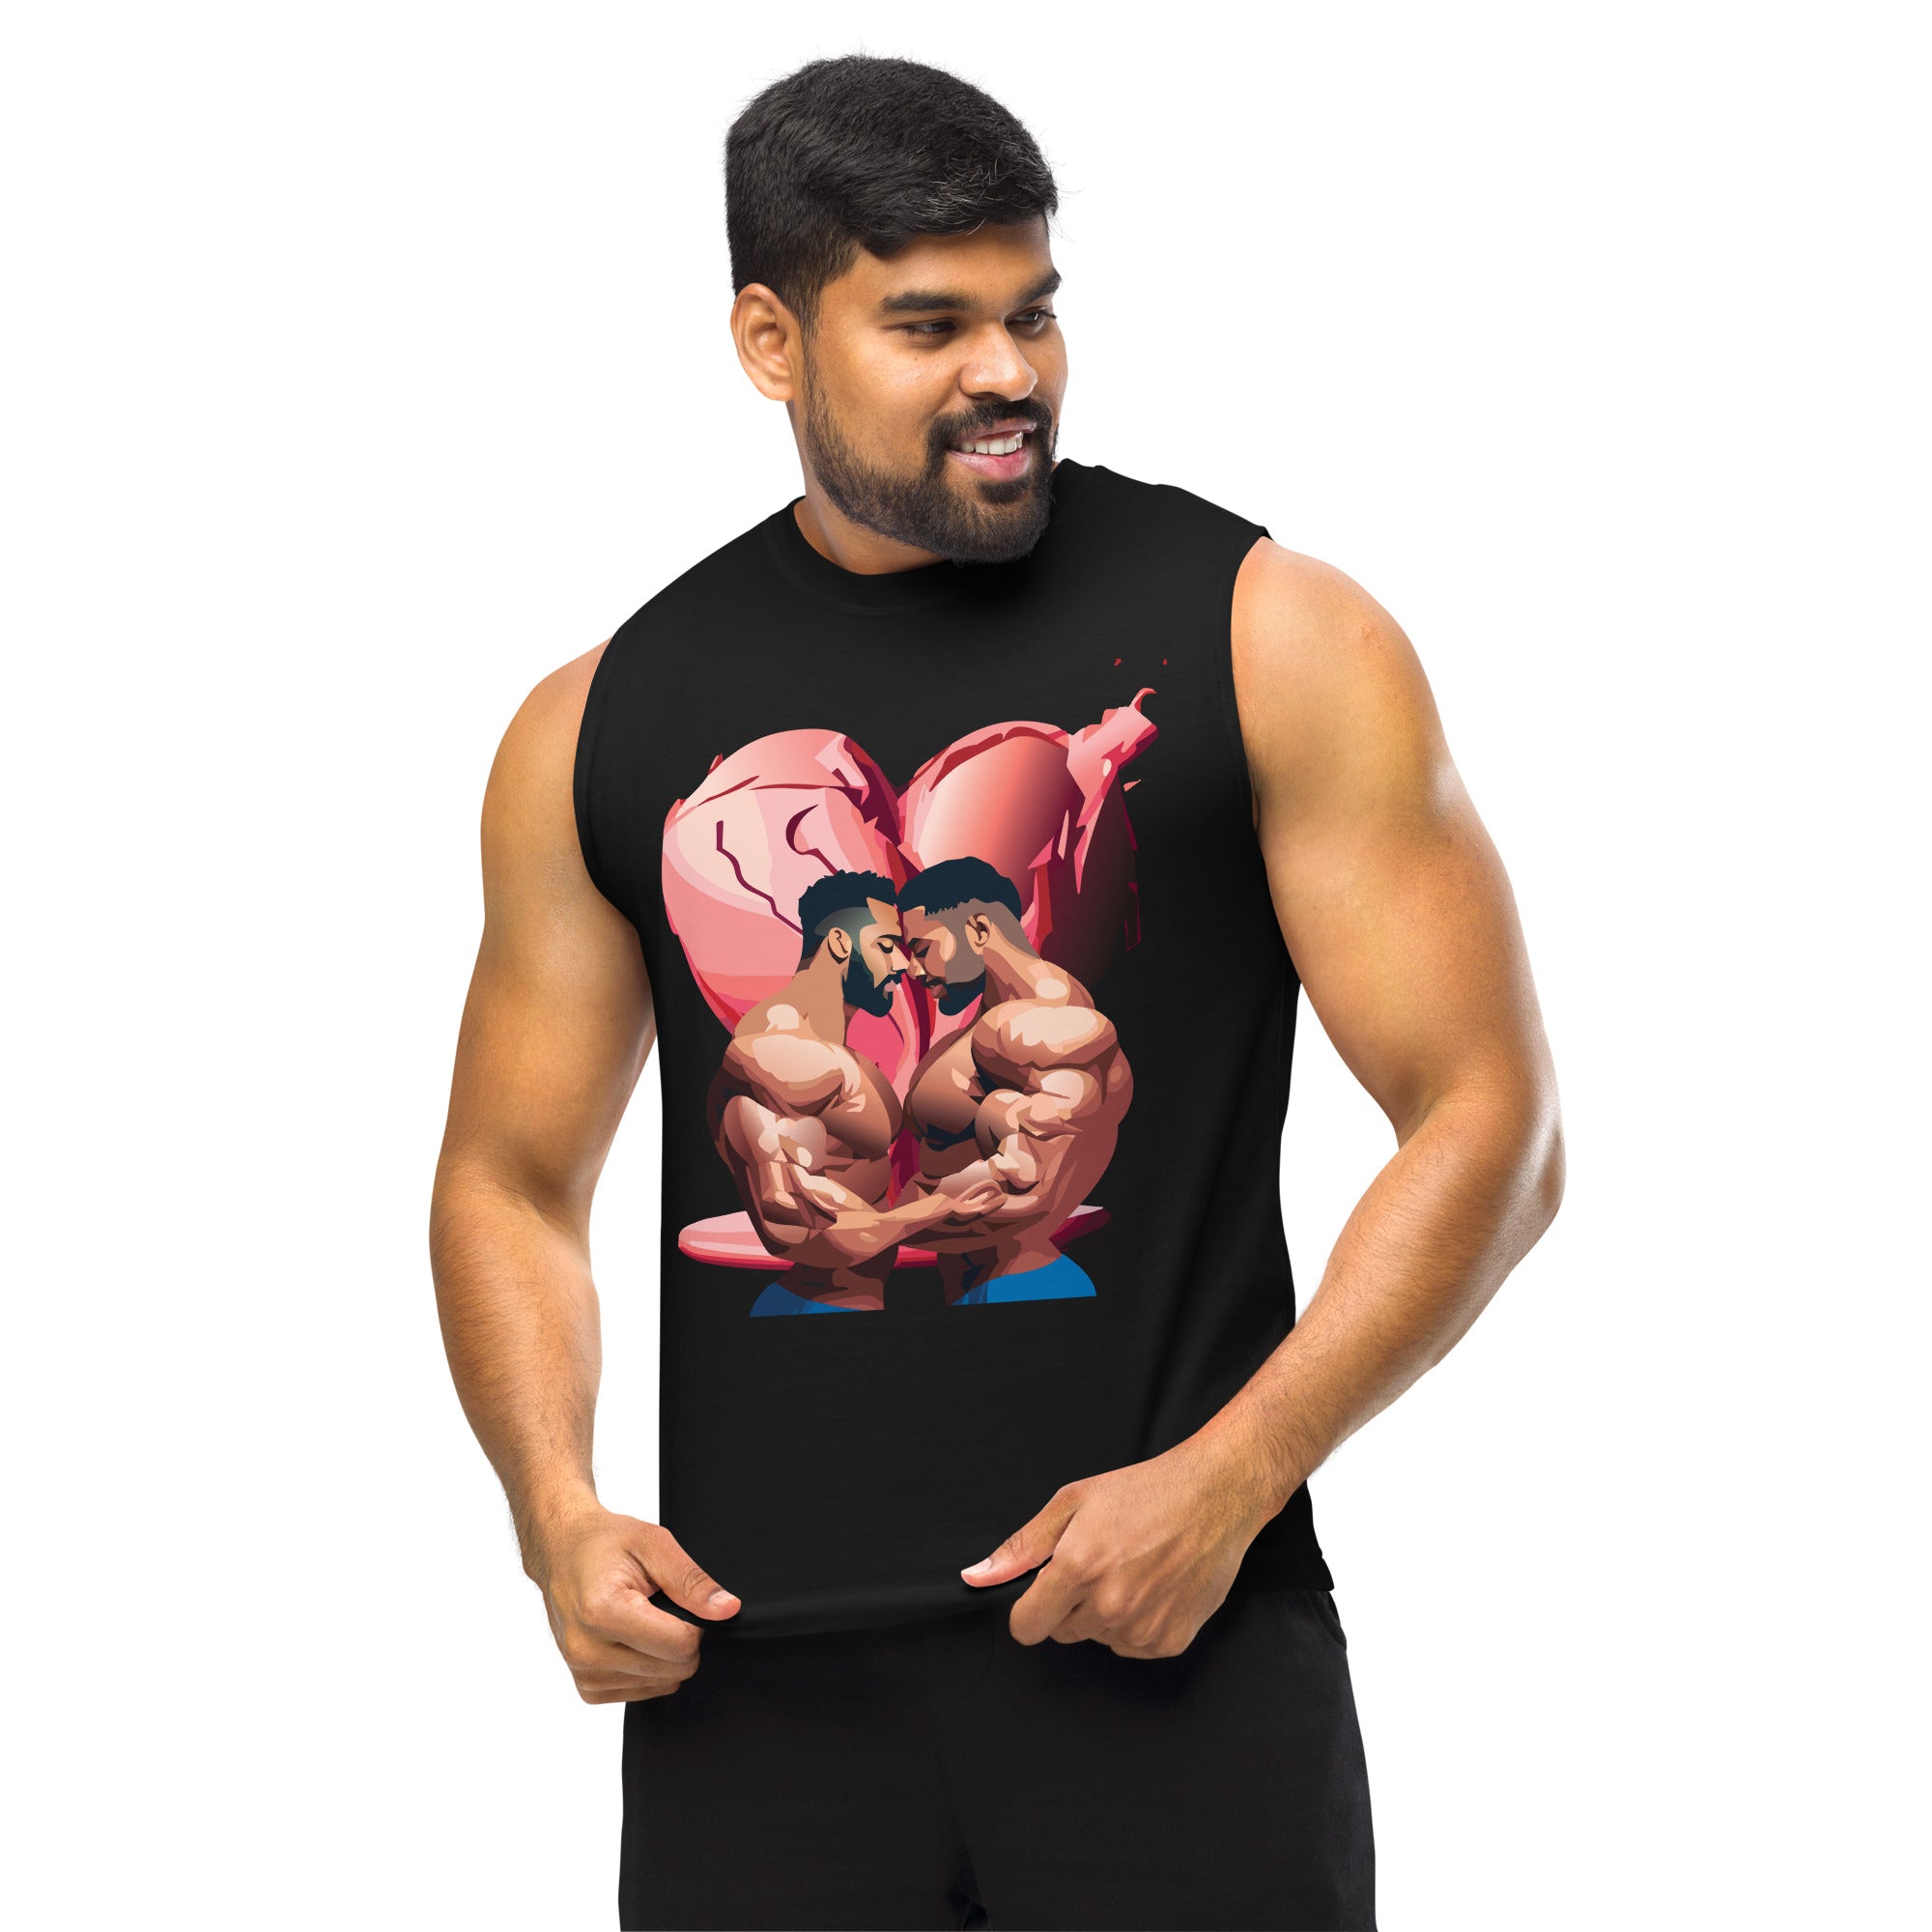 Body Builders in Love Muscle Shirt